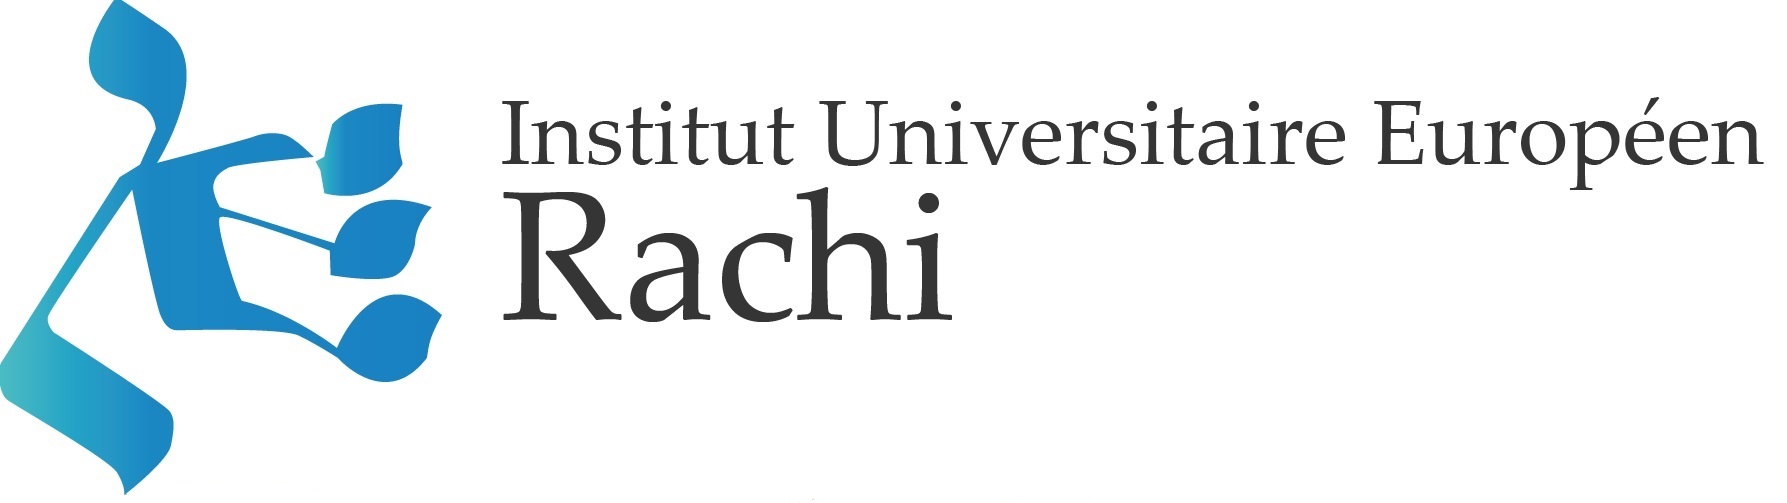 Institut Universitaire Européen Rachi